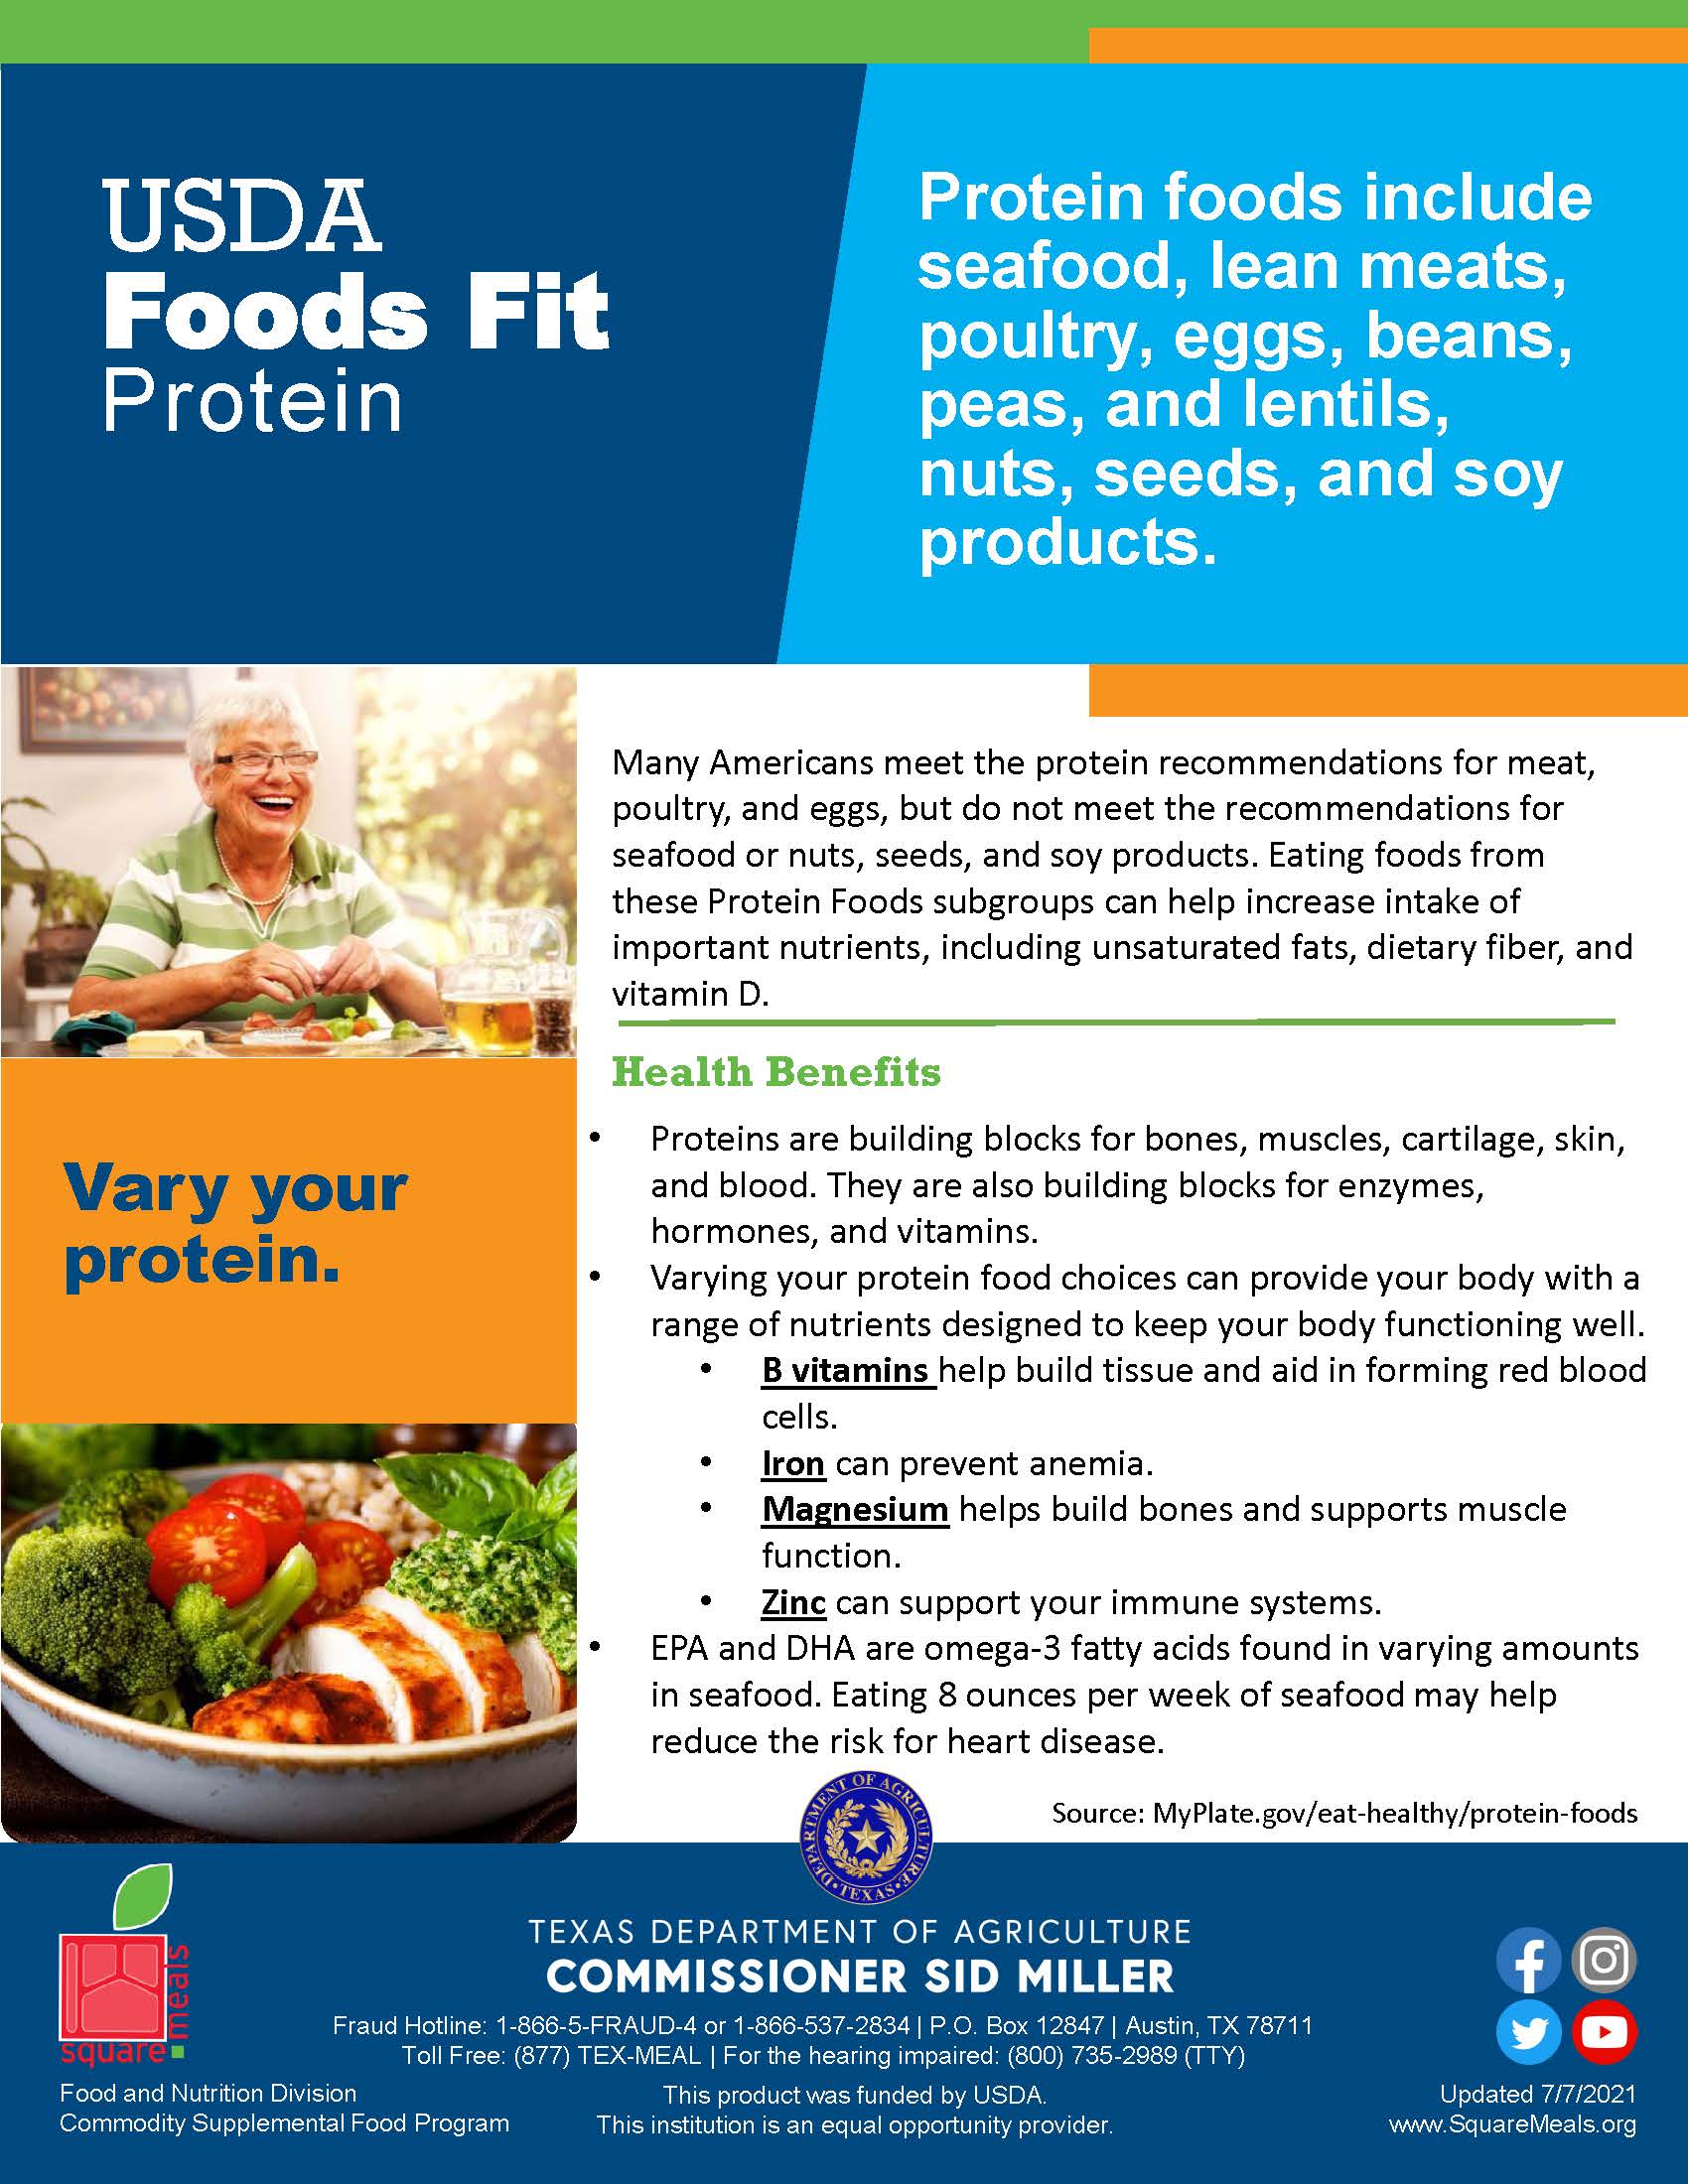 USDA Foods Fit - Protein